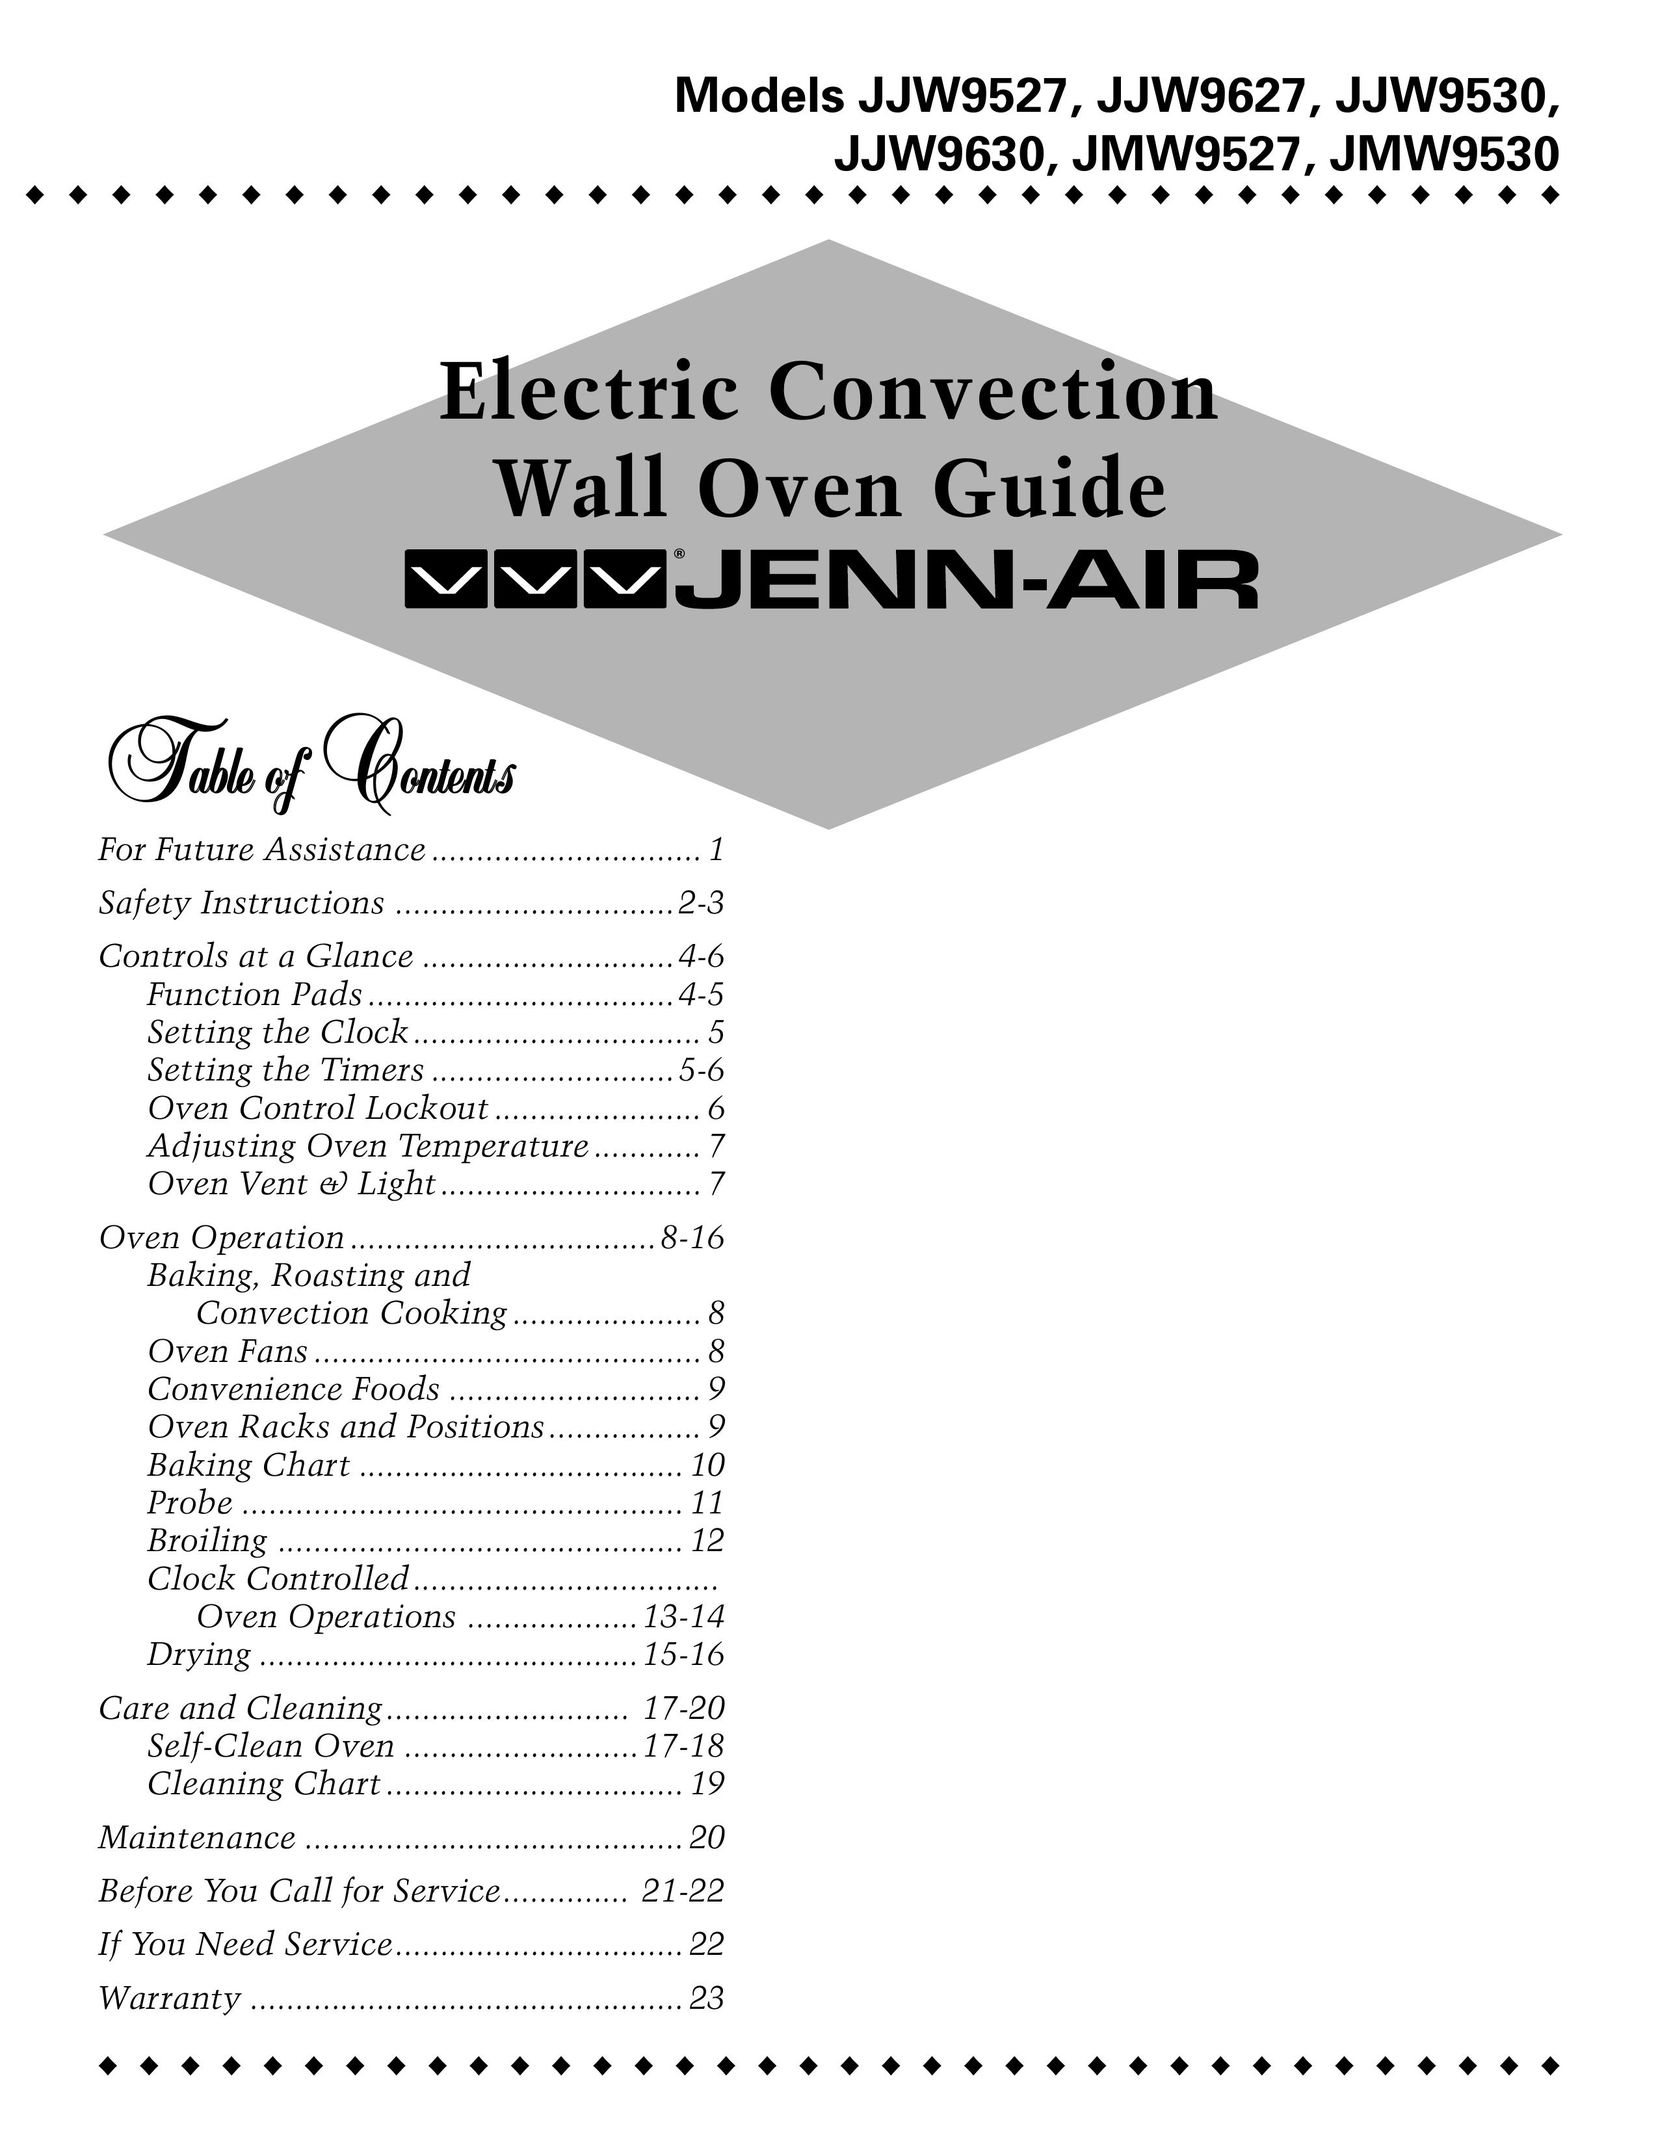 Jenn-Air JMW9527 Convection Oven User Manual